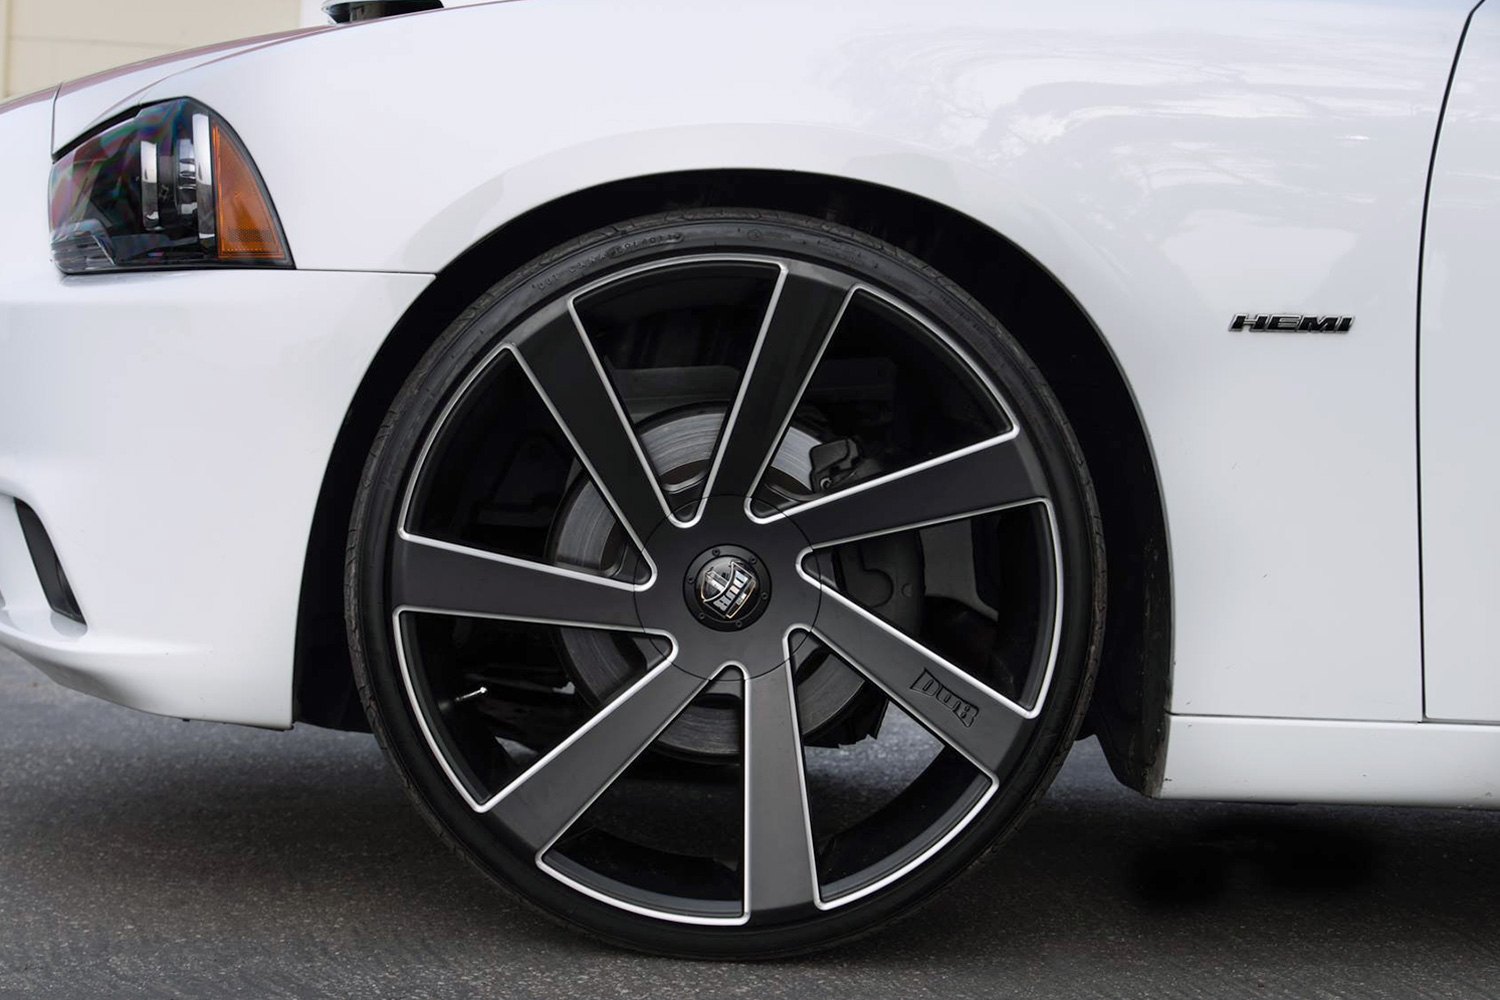 Dub S133 DIRECTA Wheel 22x9.5 (15, 5x120.65, 72.56) Black Single Rim.